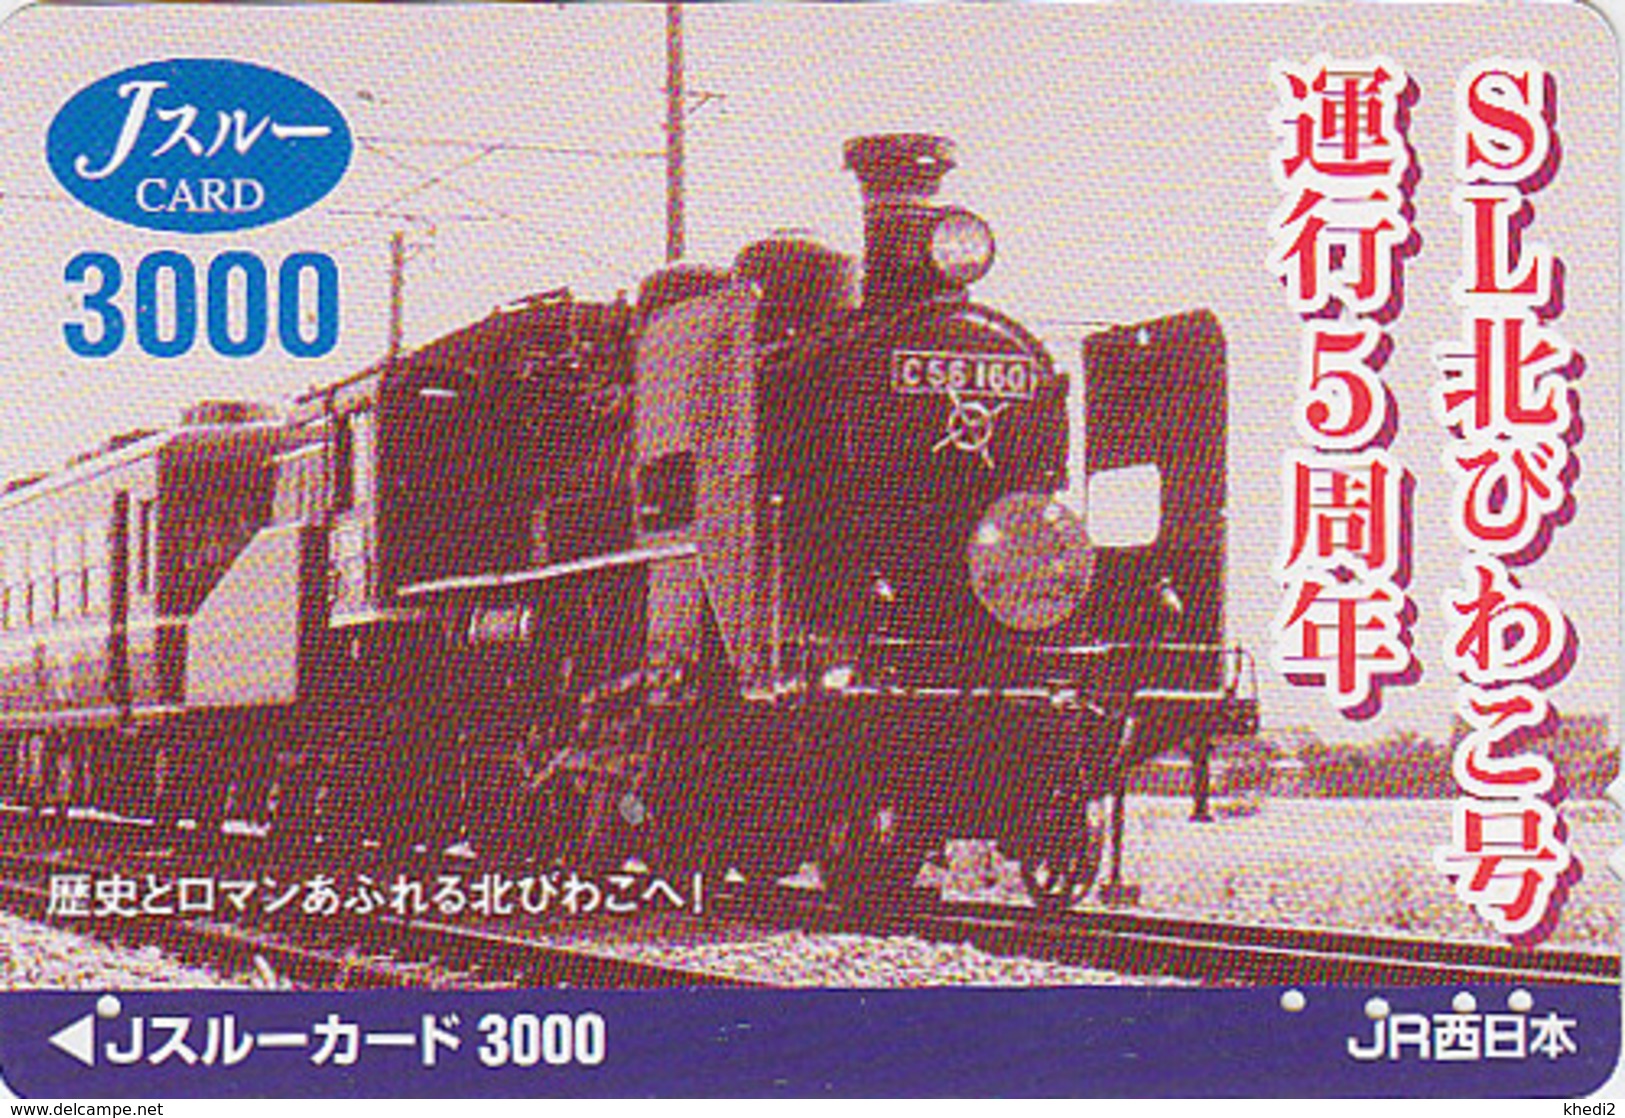 Carte Prépayée Japon - STEAM TRAIN A VAPEUR LOCO -  Japan JR J Card - ZUG Prepaid Karte - TREIN - 1728 - Japan